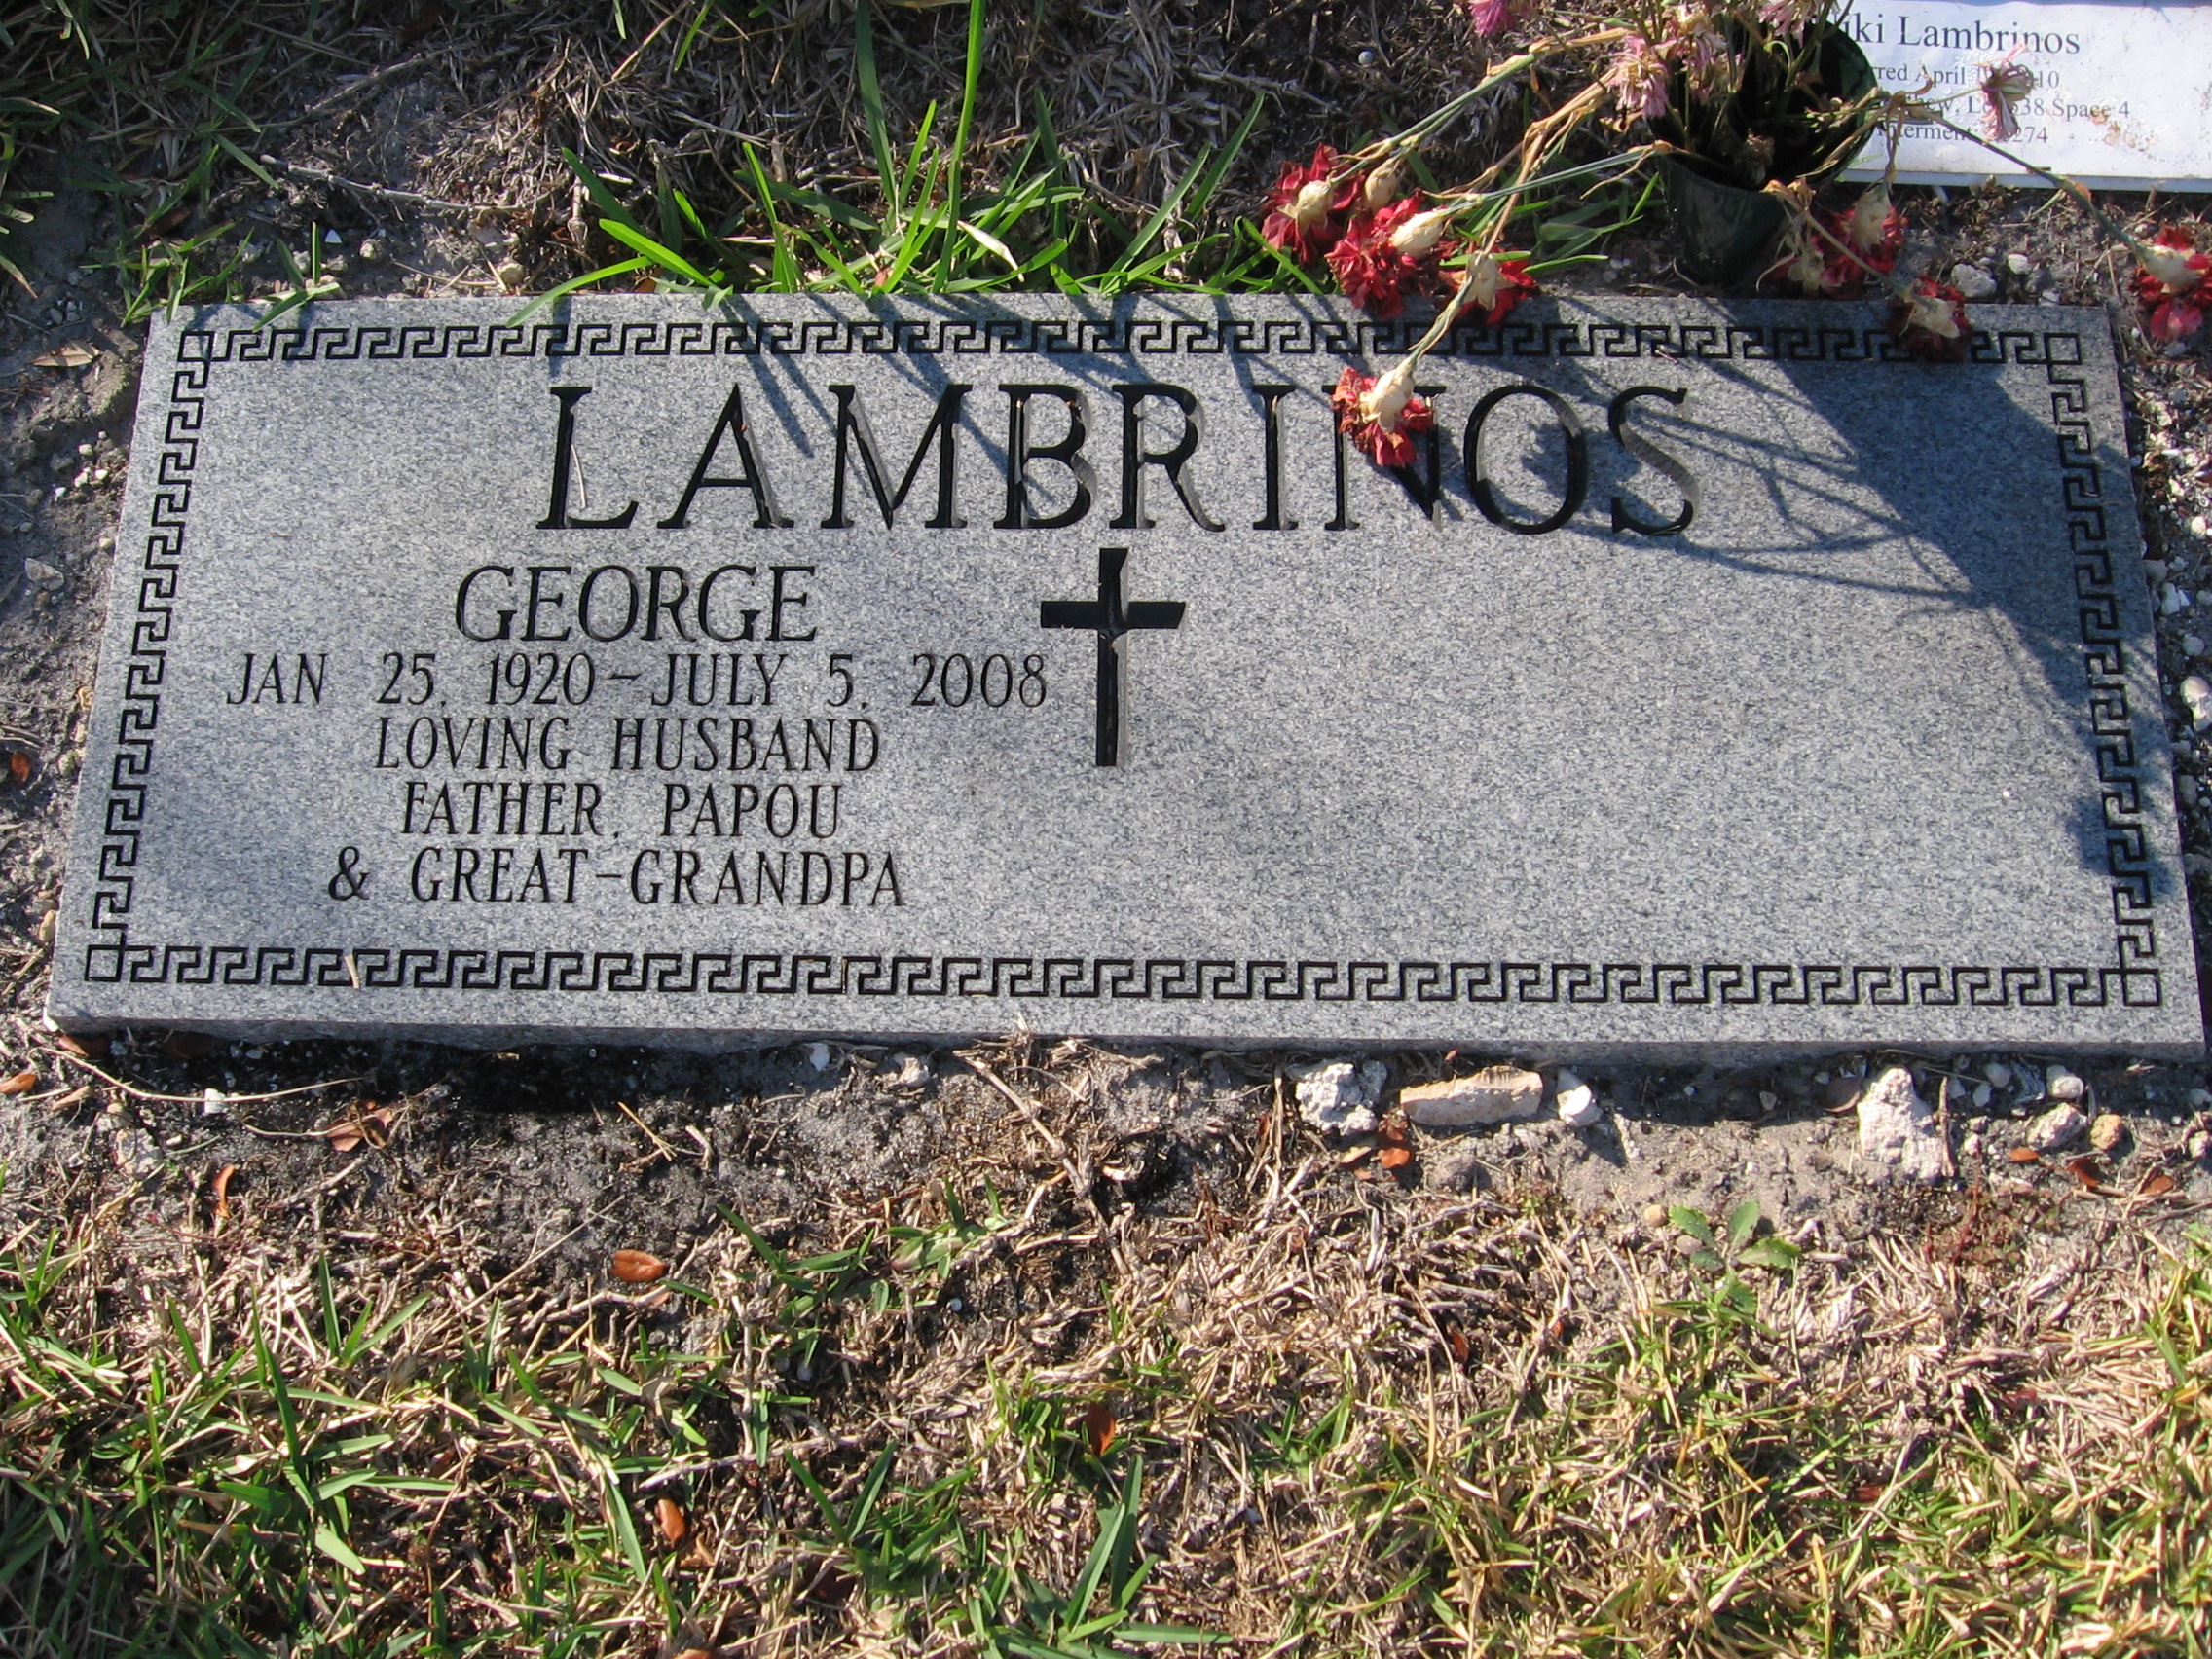 George Lambrinos